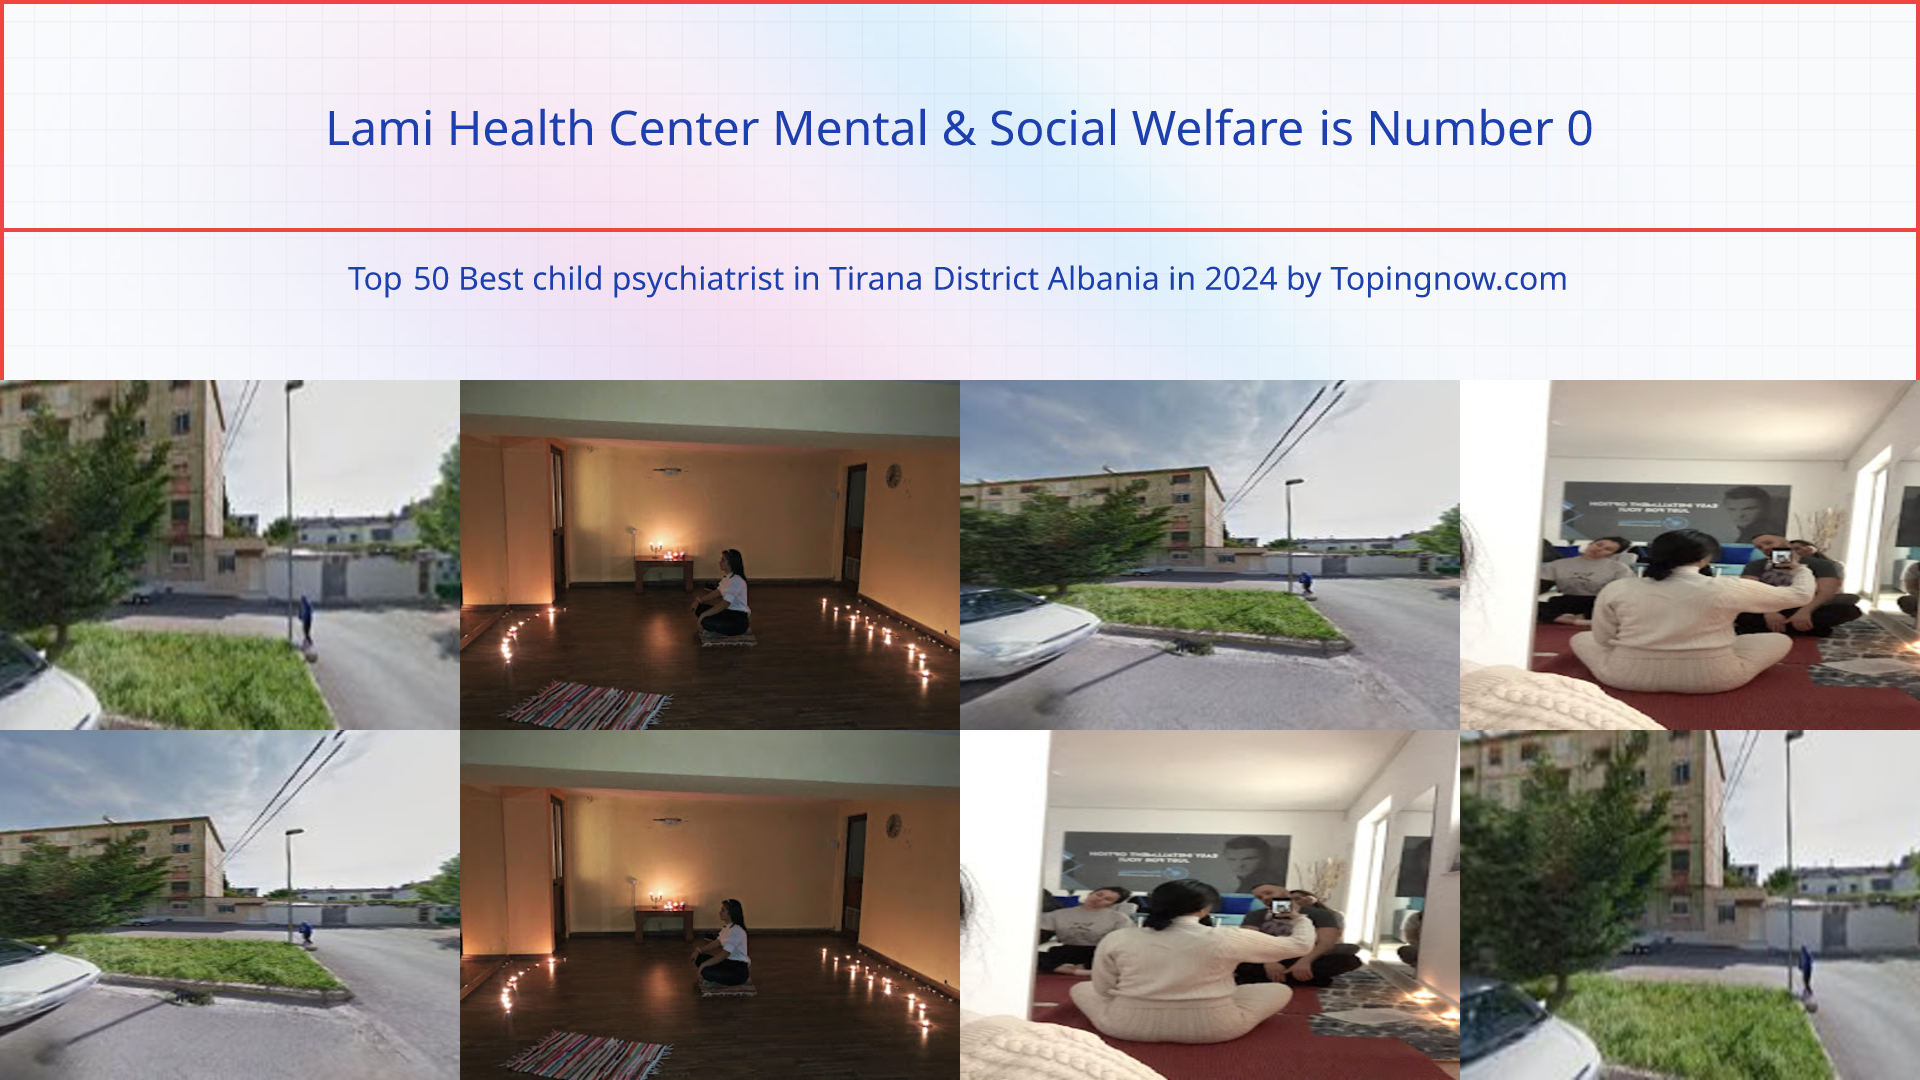 Lami Health Center Mental & Social Welfare: Top 50 Best child psychiatrist in Tirana District Albania in 2024